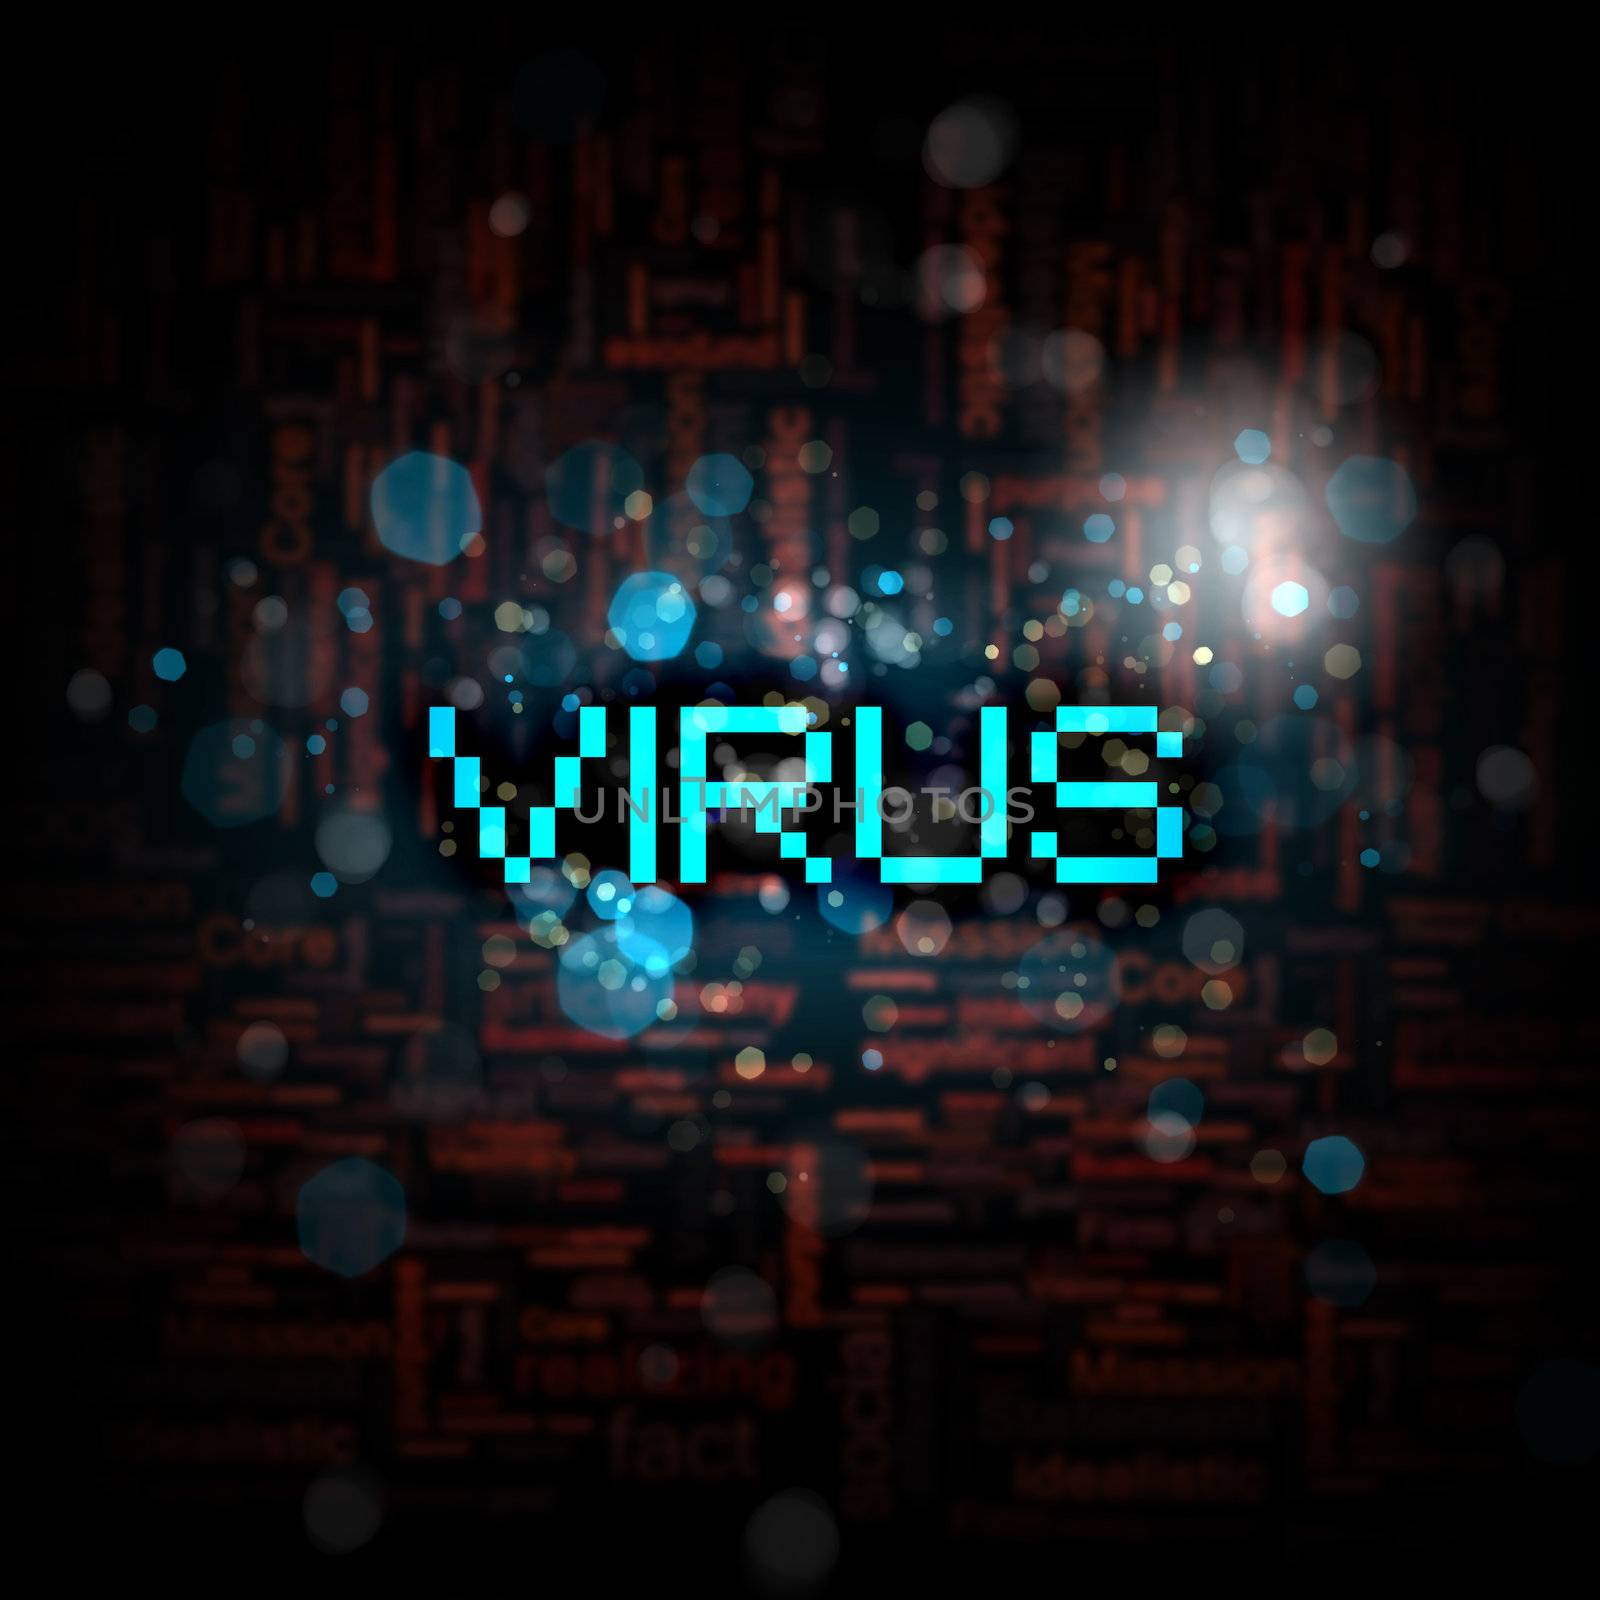 A computer virus detection symbol illustration with word Virus